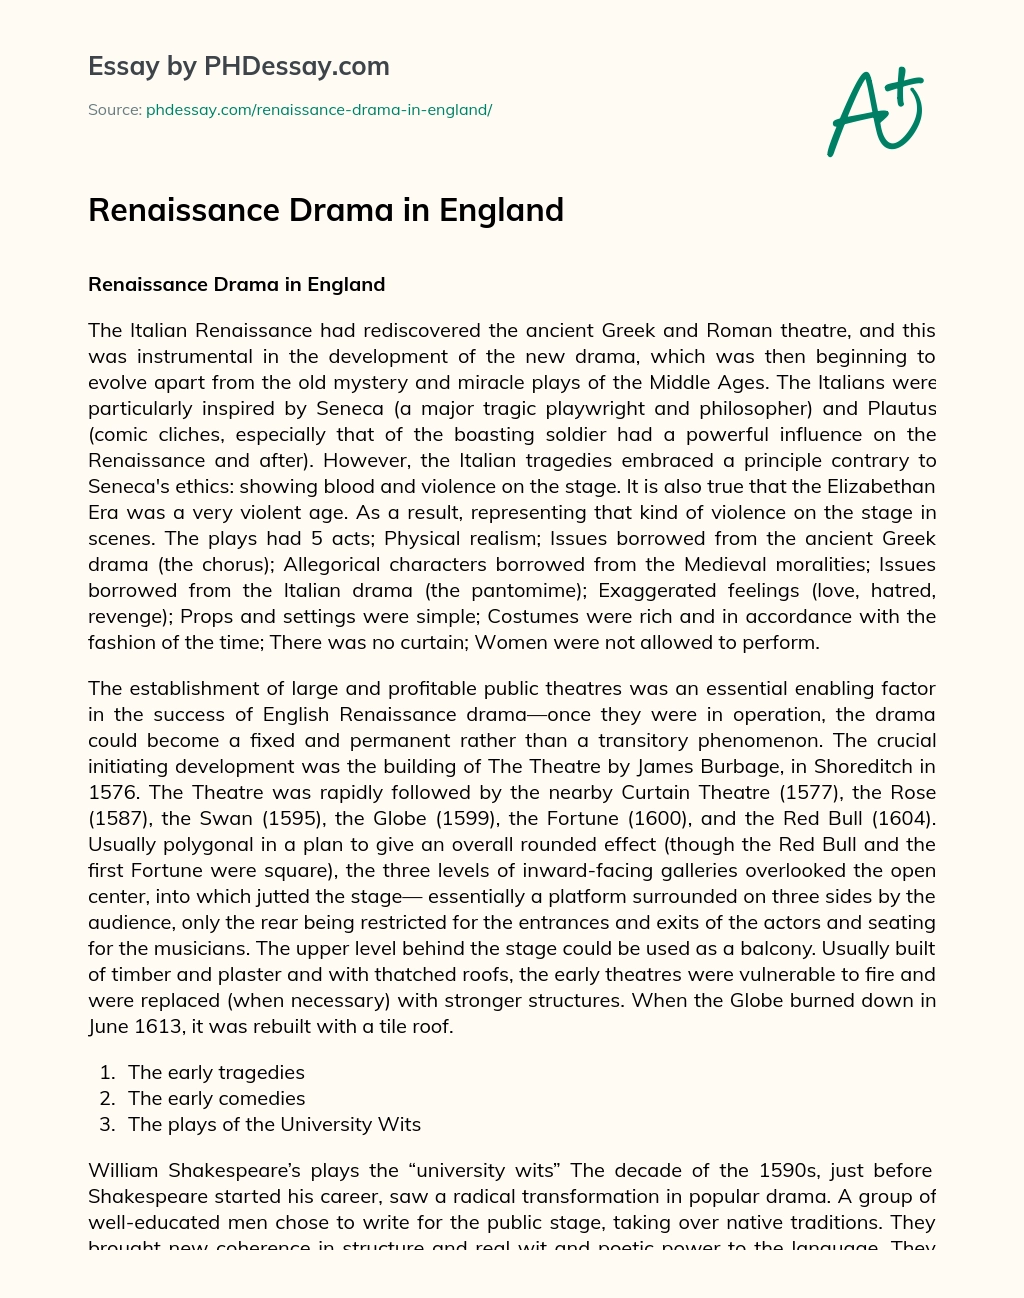 essay on the renaissance drama